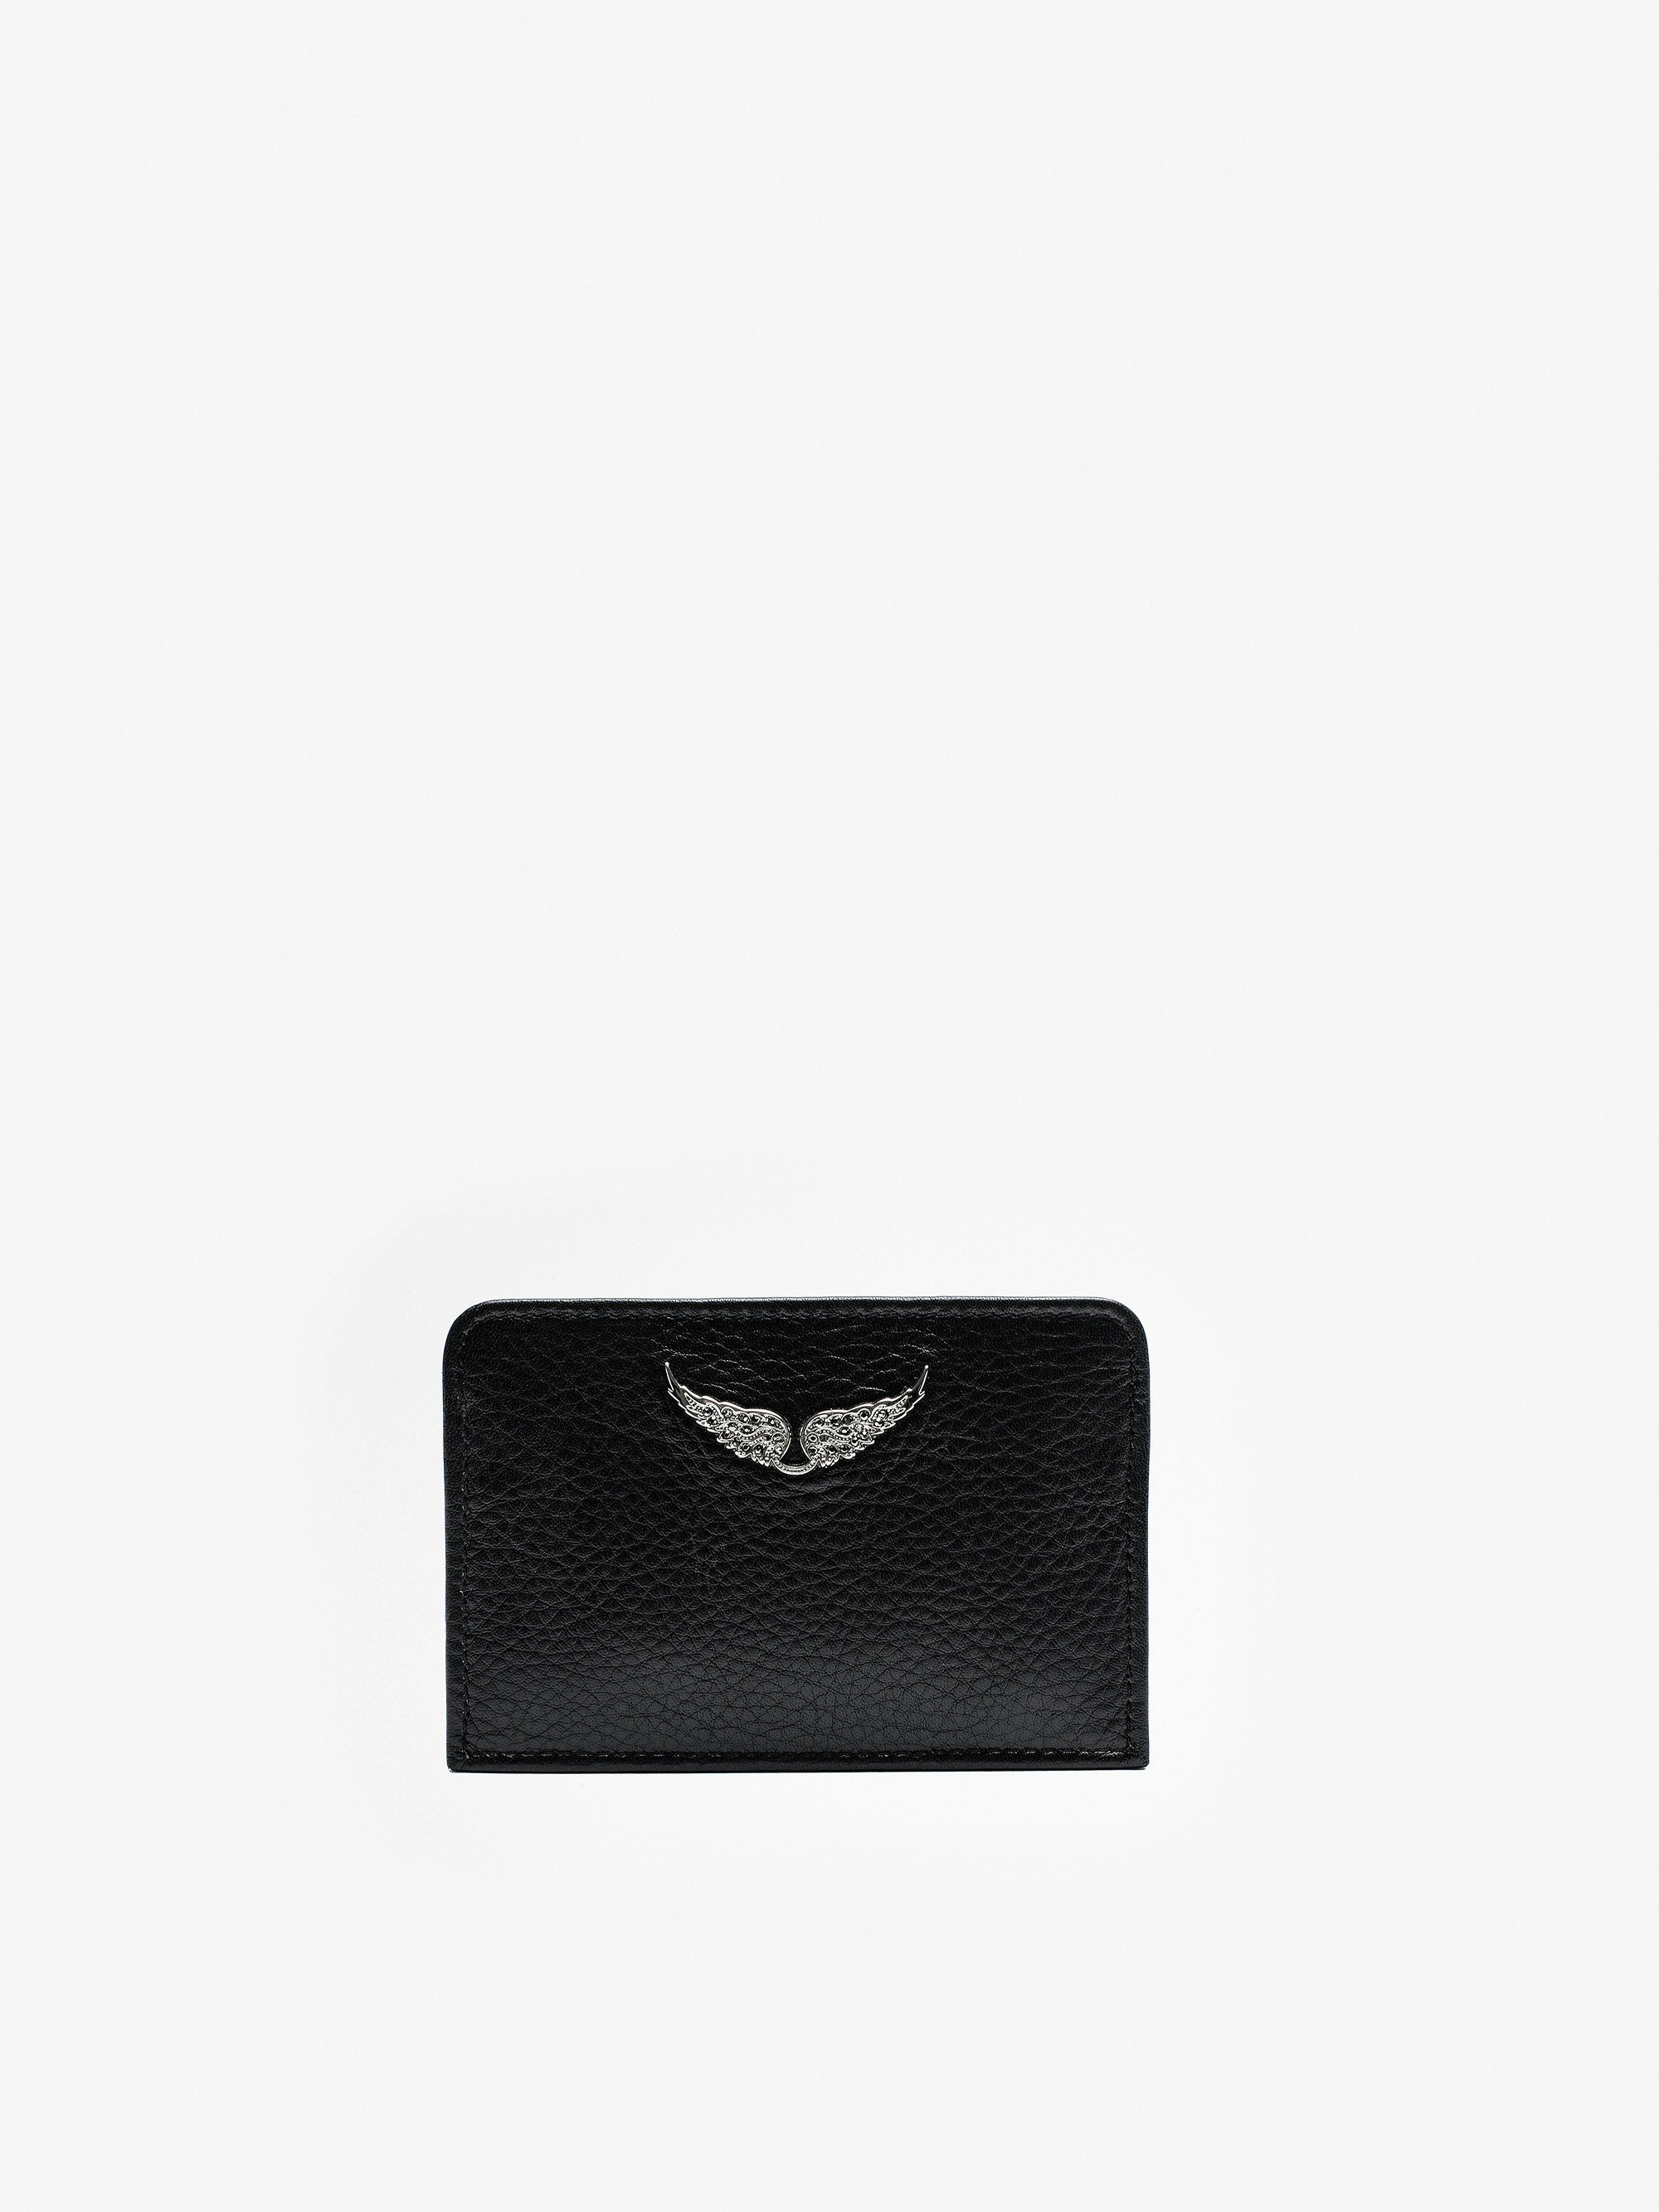 Card Case ZV Pass - ZV Pass women’s black leather card holder.